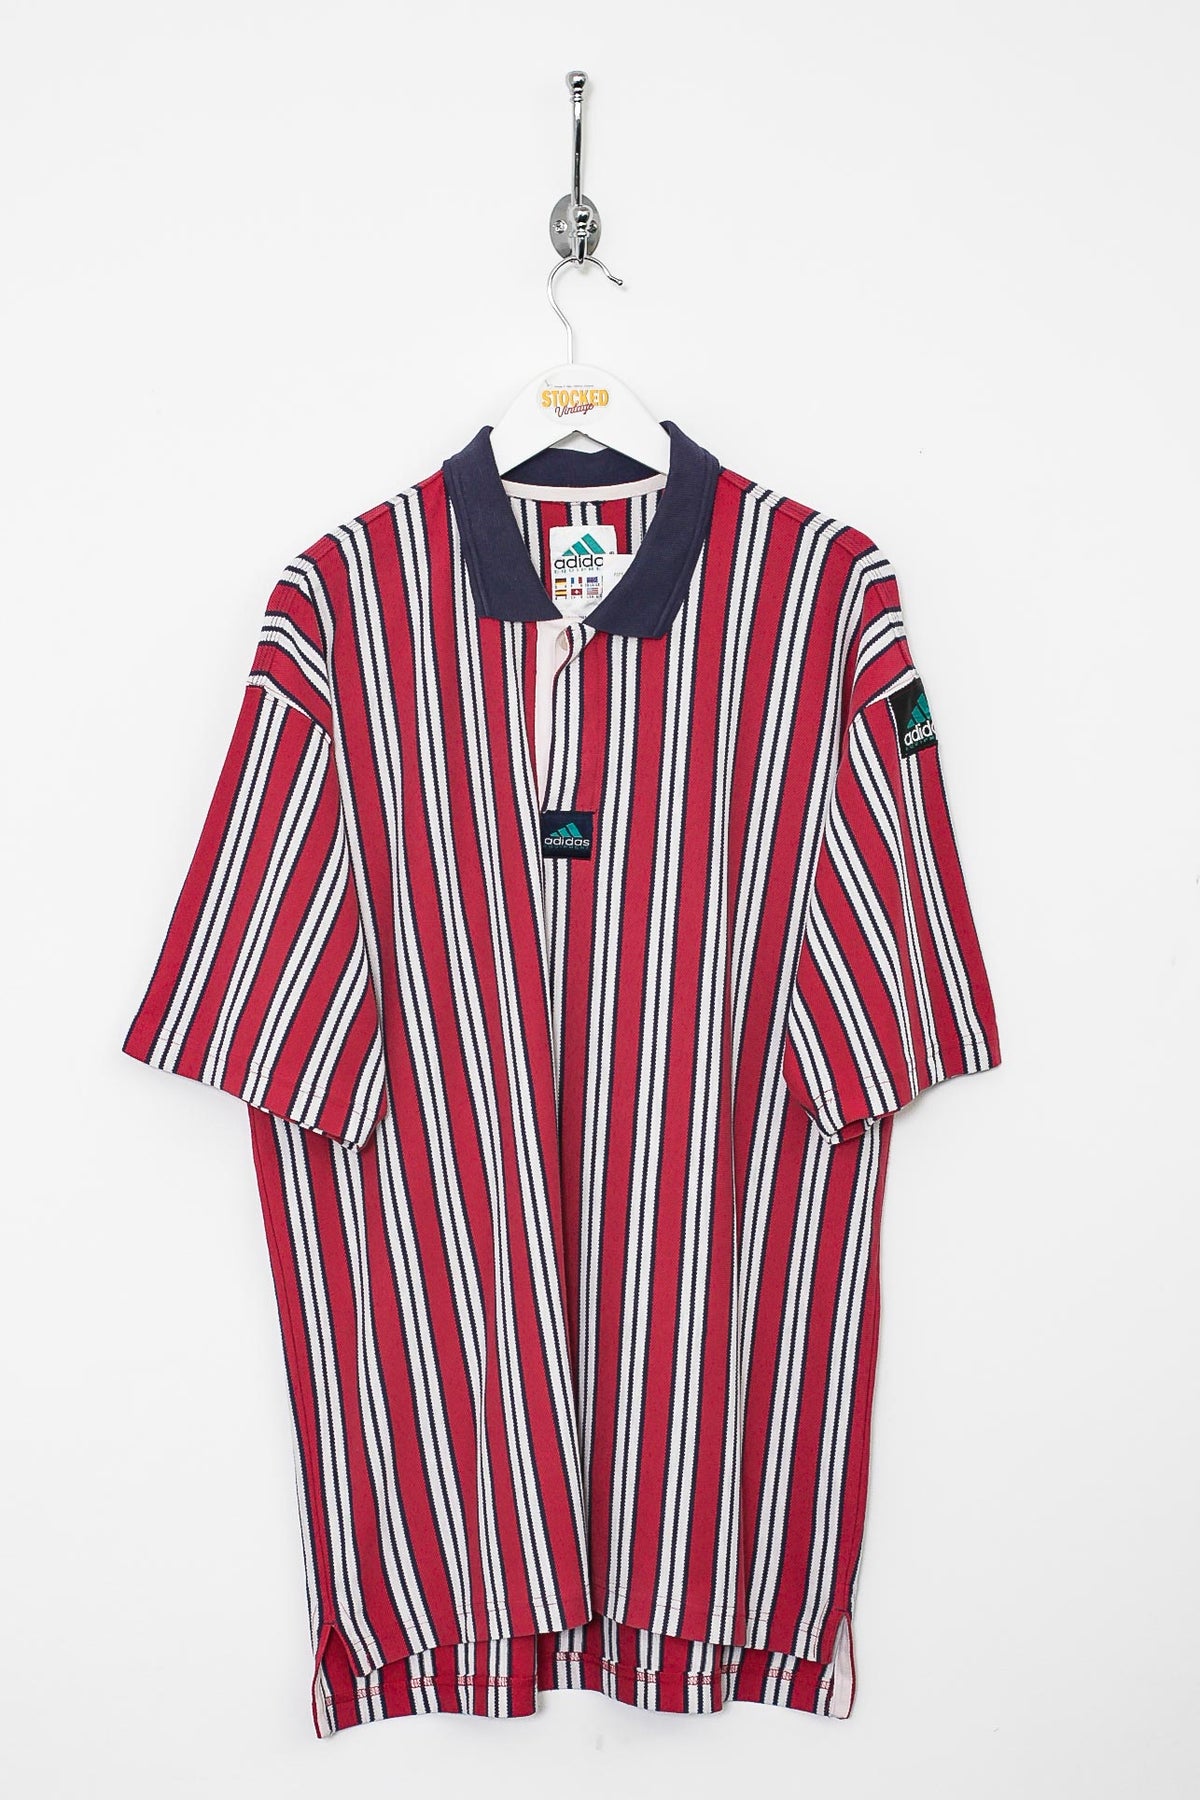 90s Adidas Equipment Polo Shirt (L)